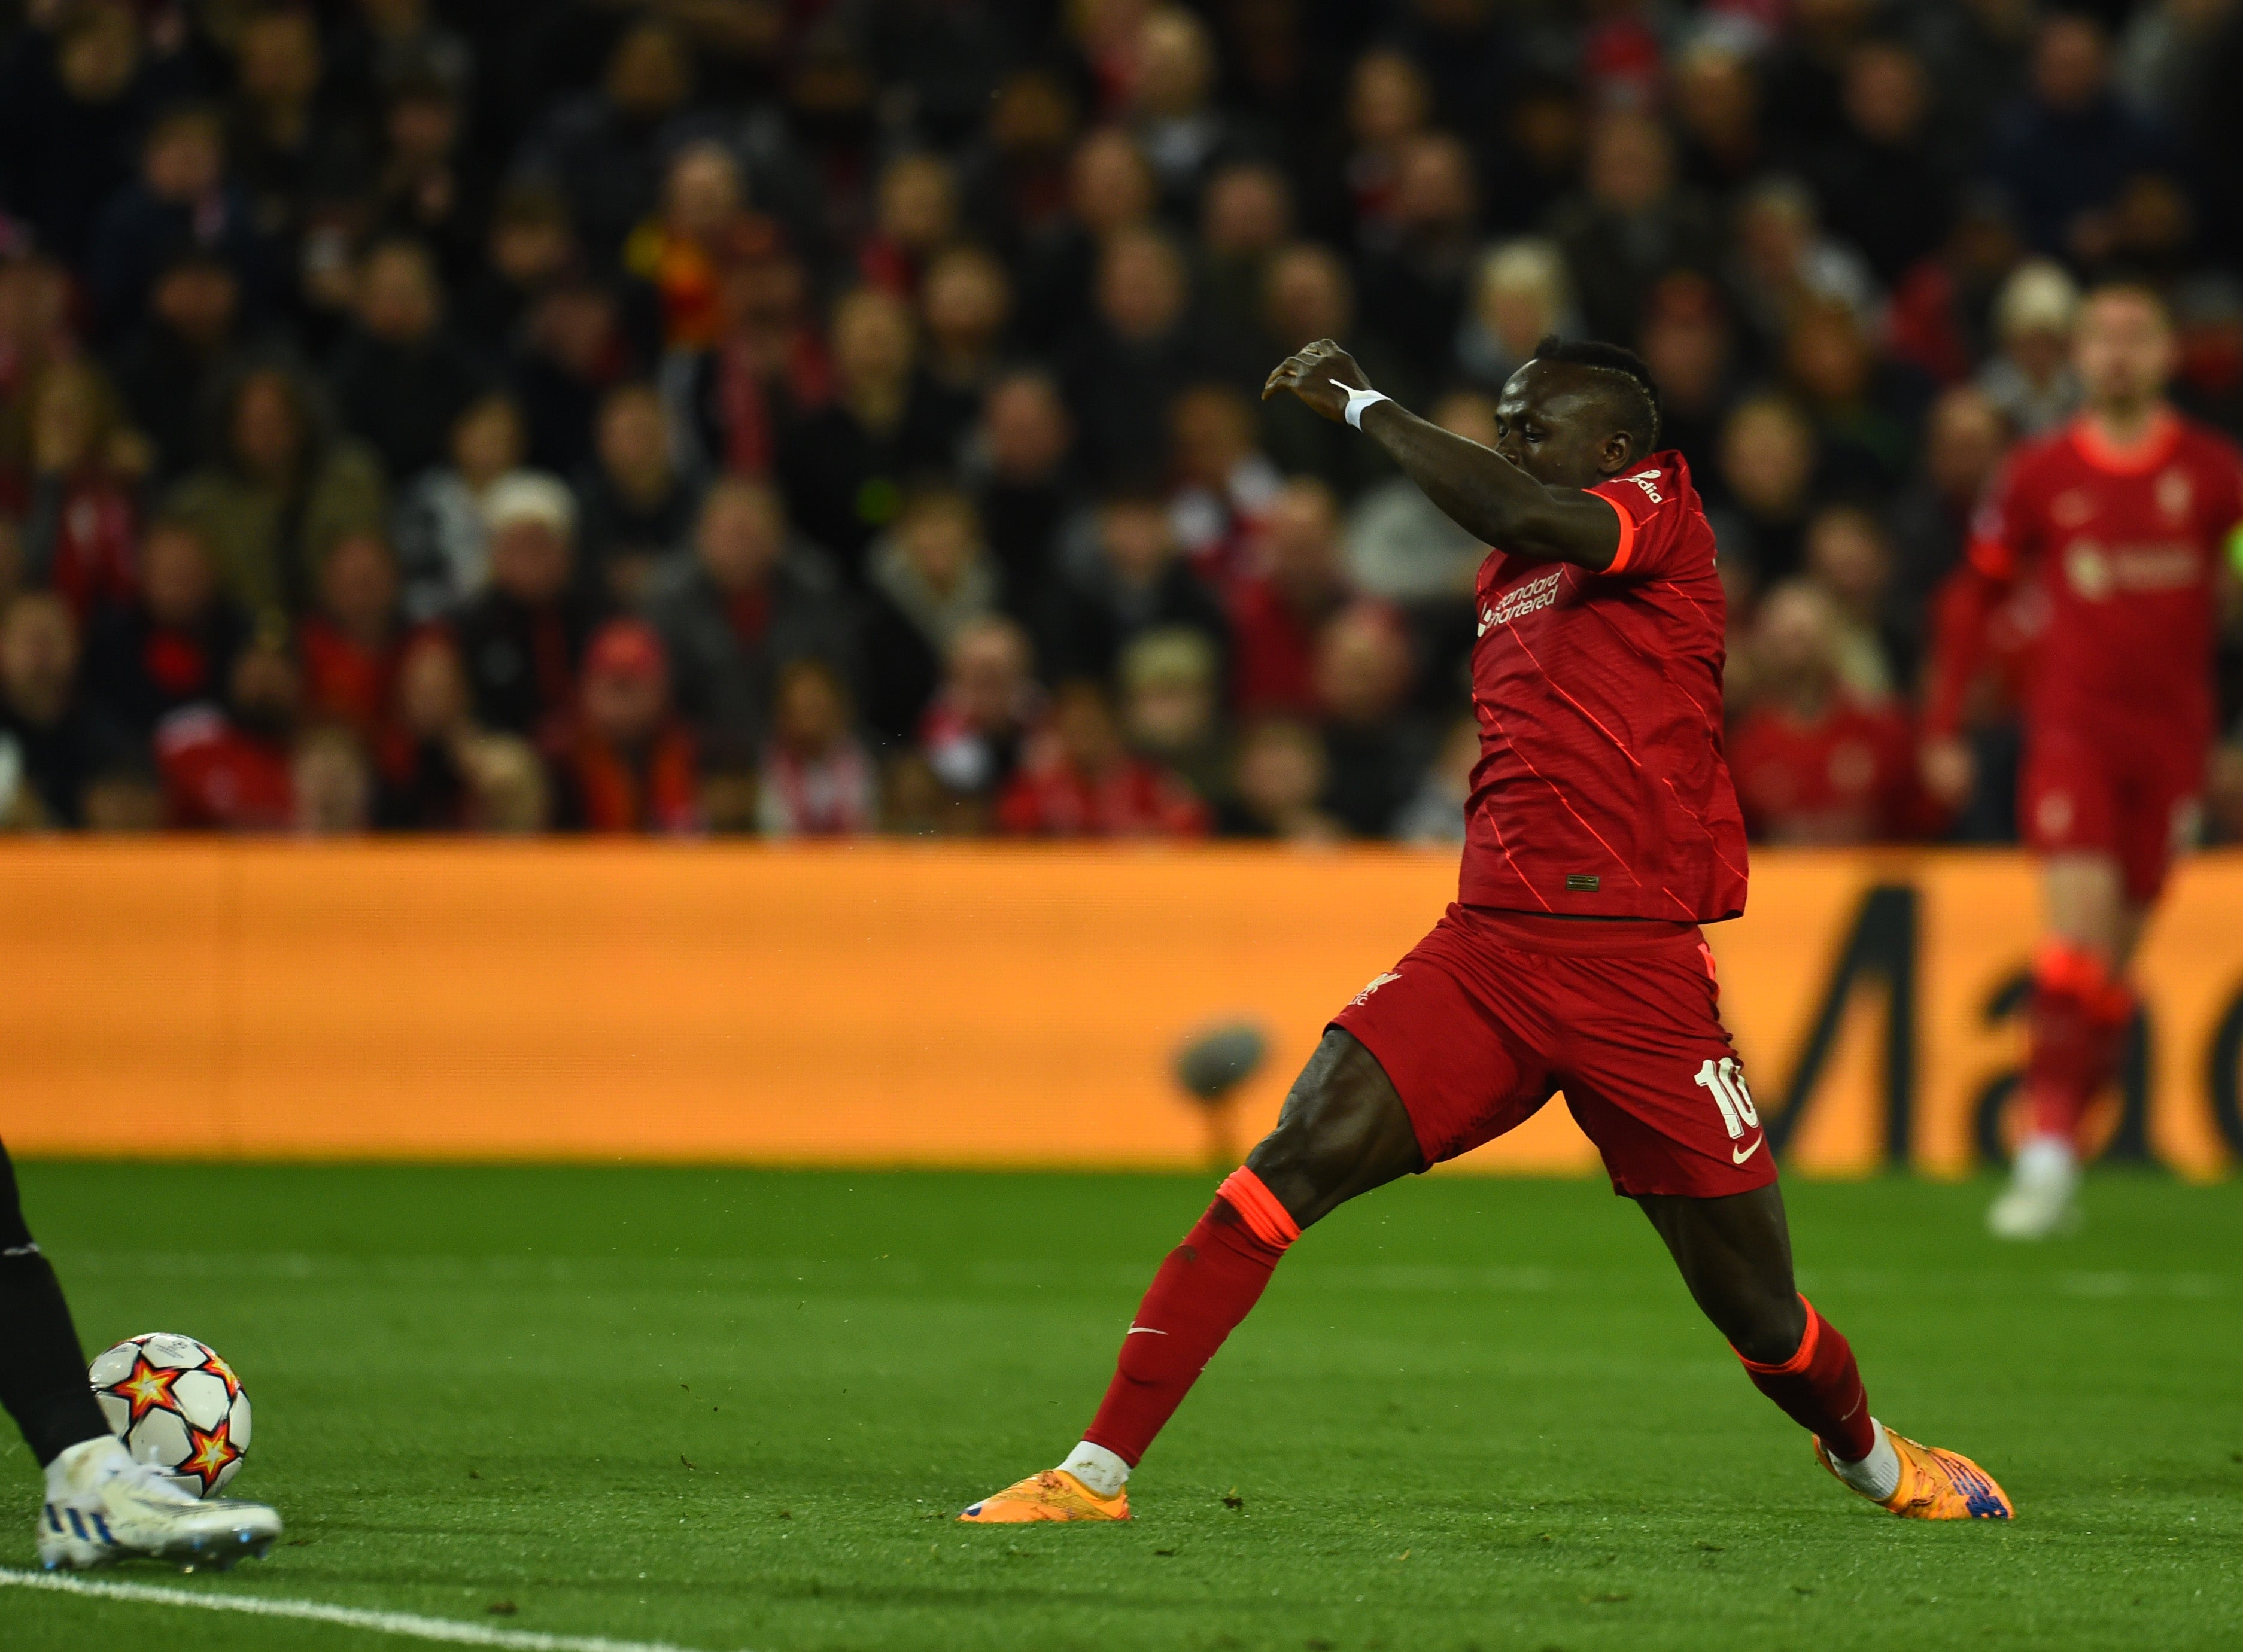 Sadio Mane scored Liverpool’s second goal